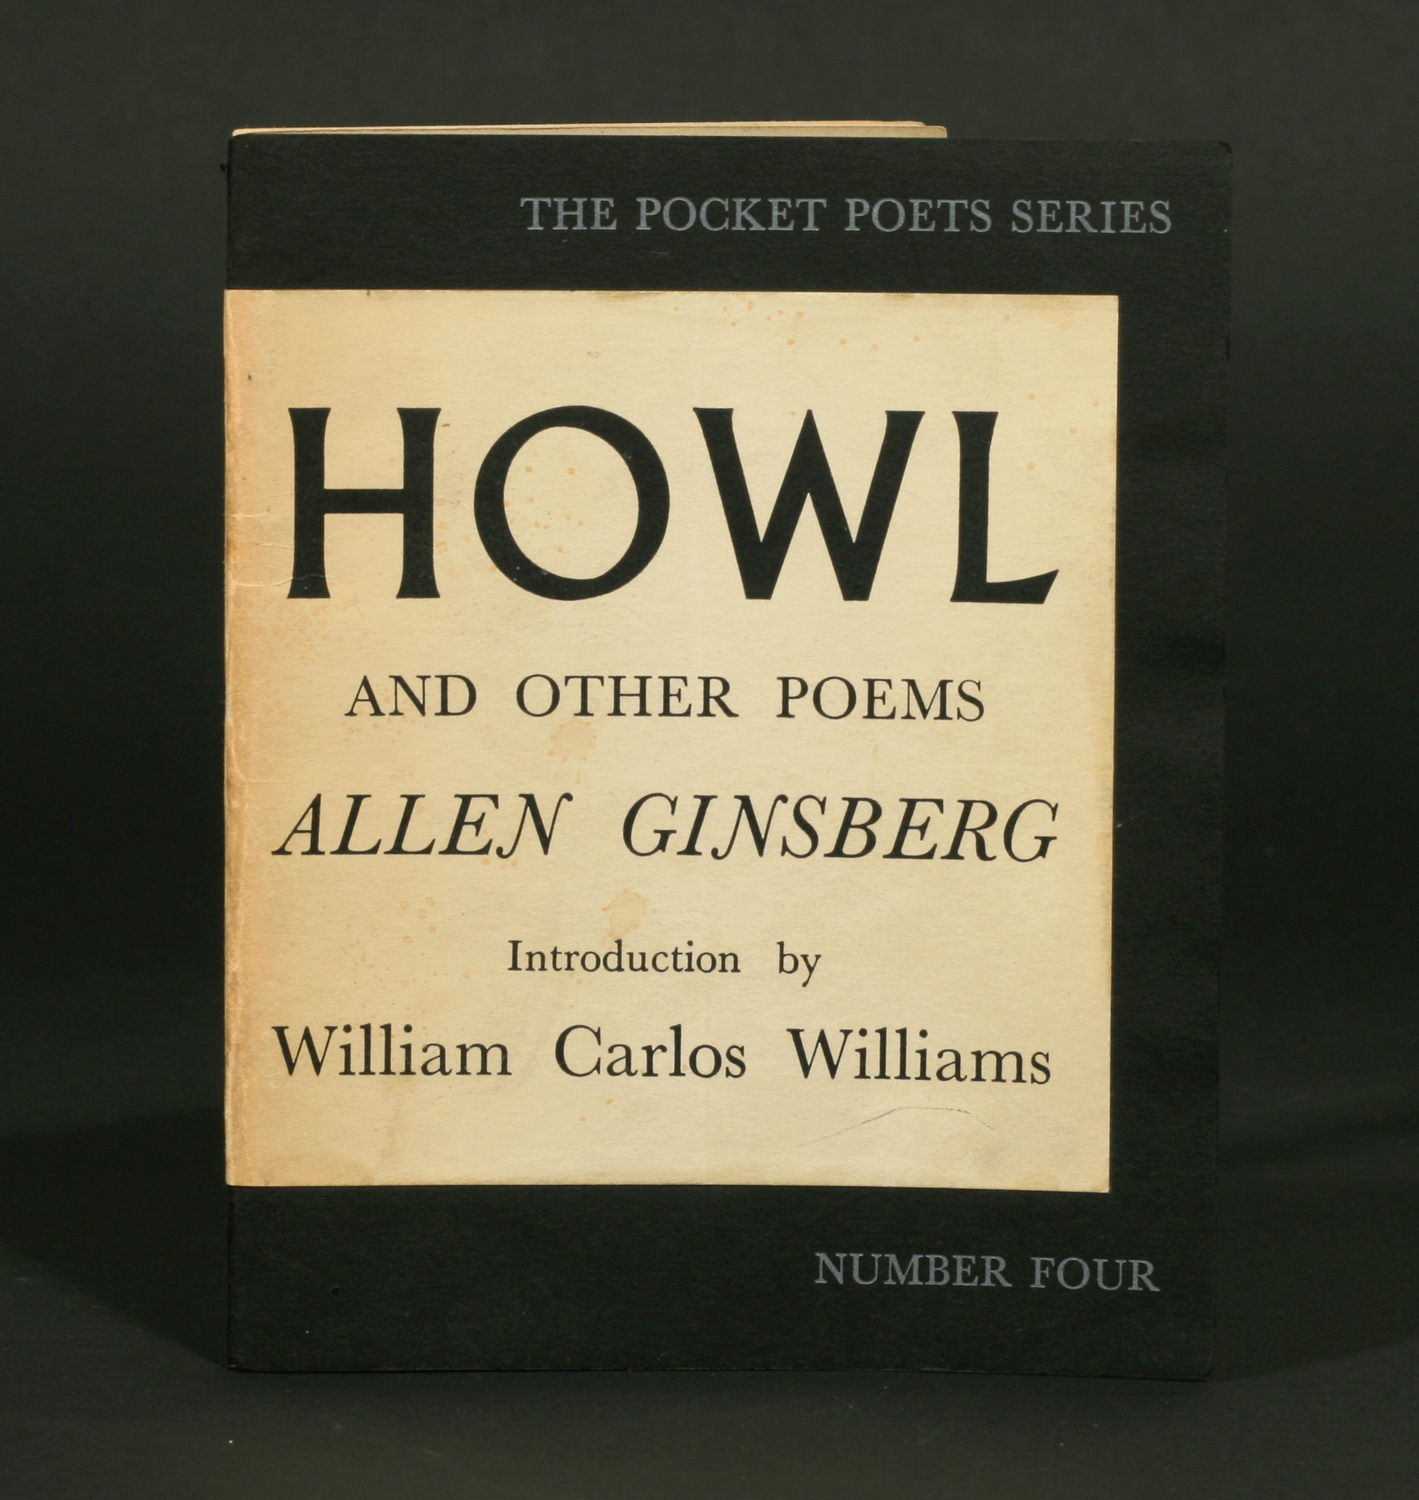 Гинзберг вопль. Гинзберг вопль книга. Аллен Гинзберг вопль. Поэма вопль Аллена Гинзберга. Howl and other poems книга.